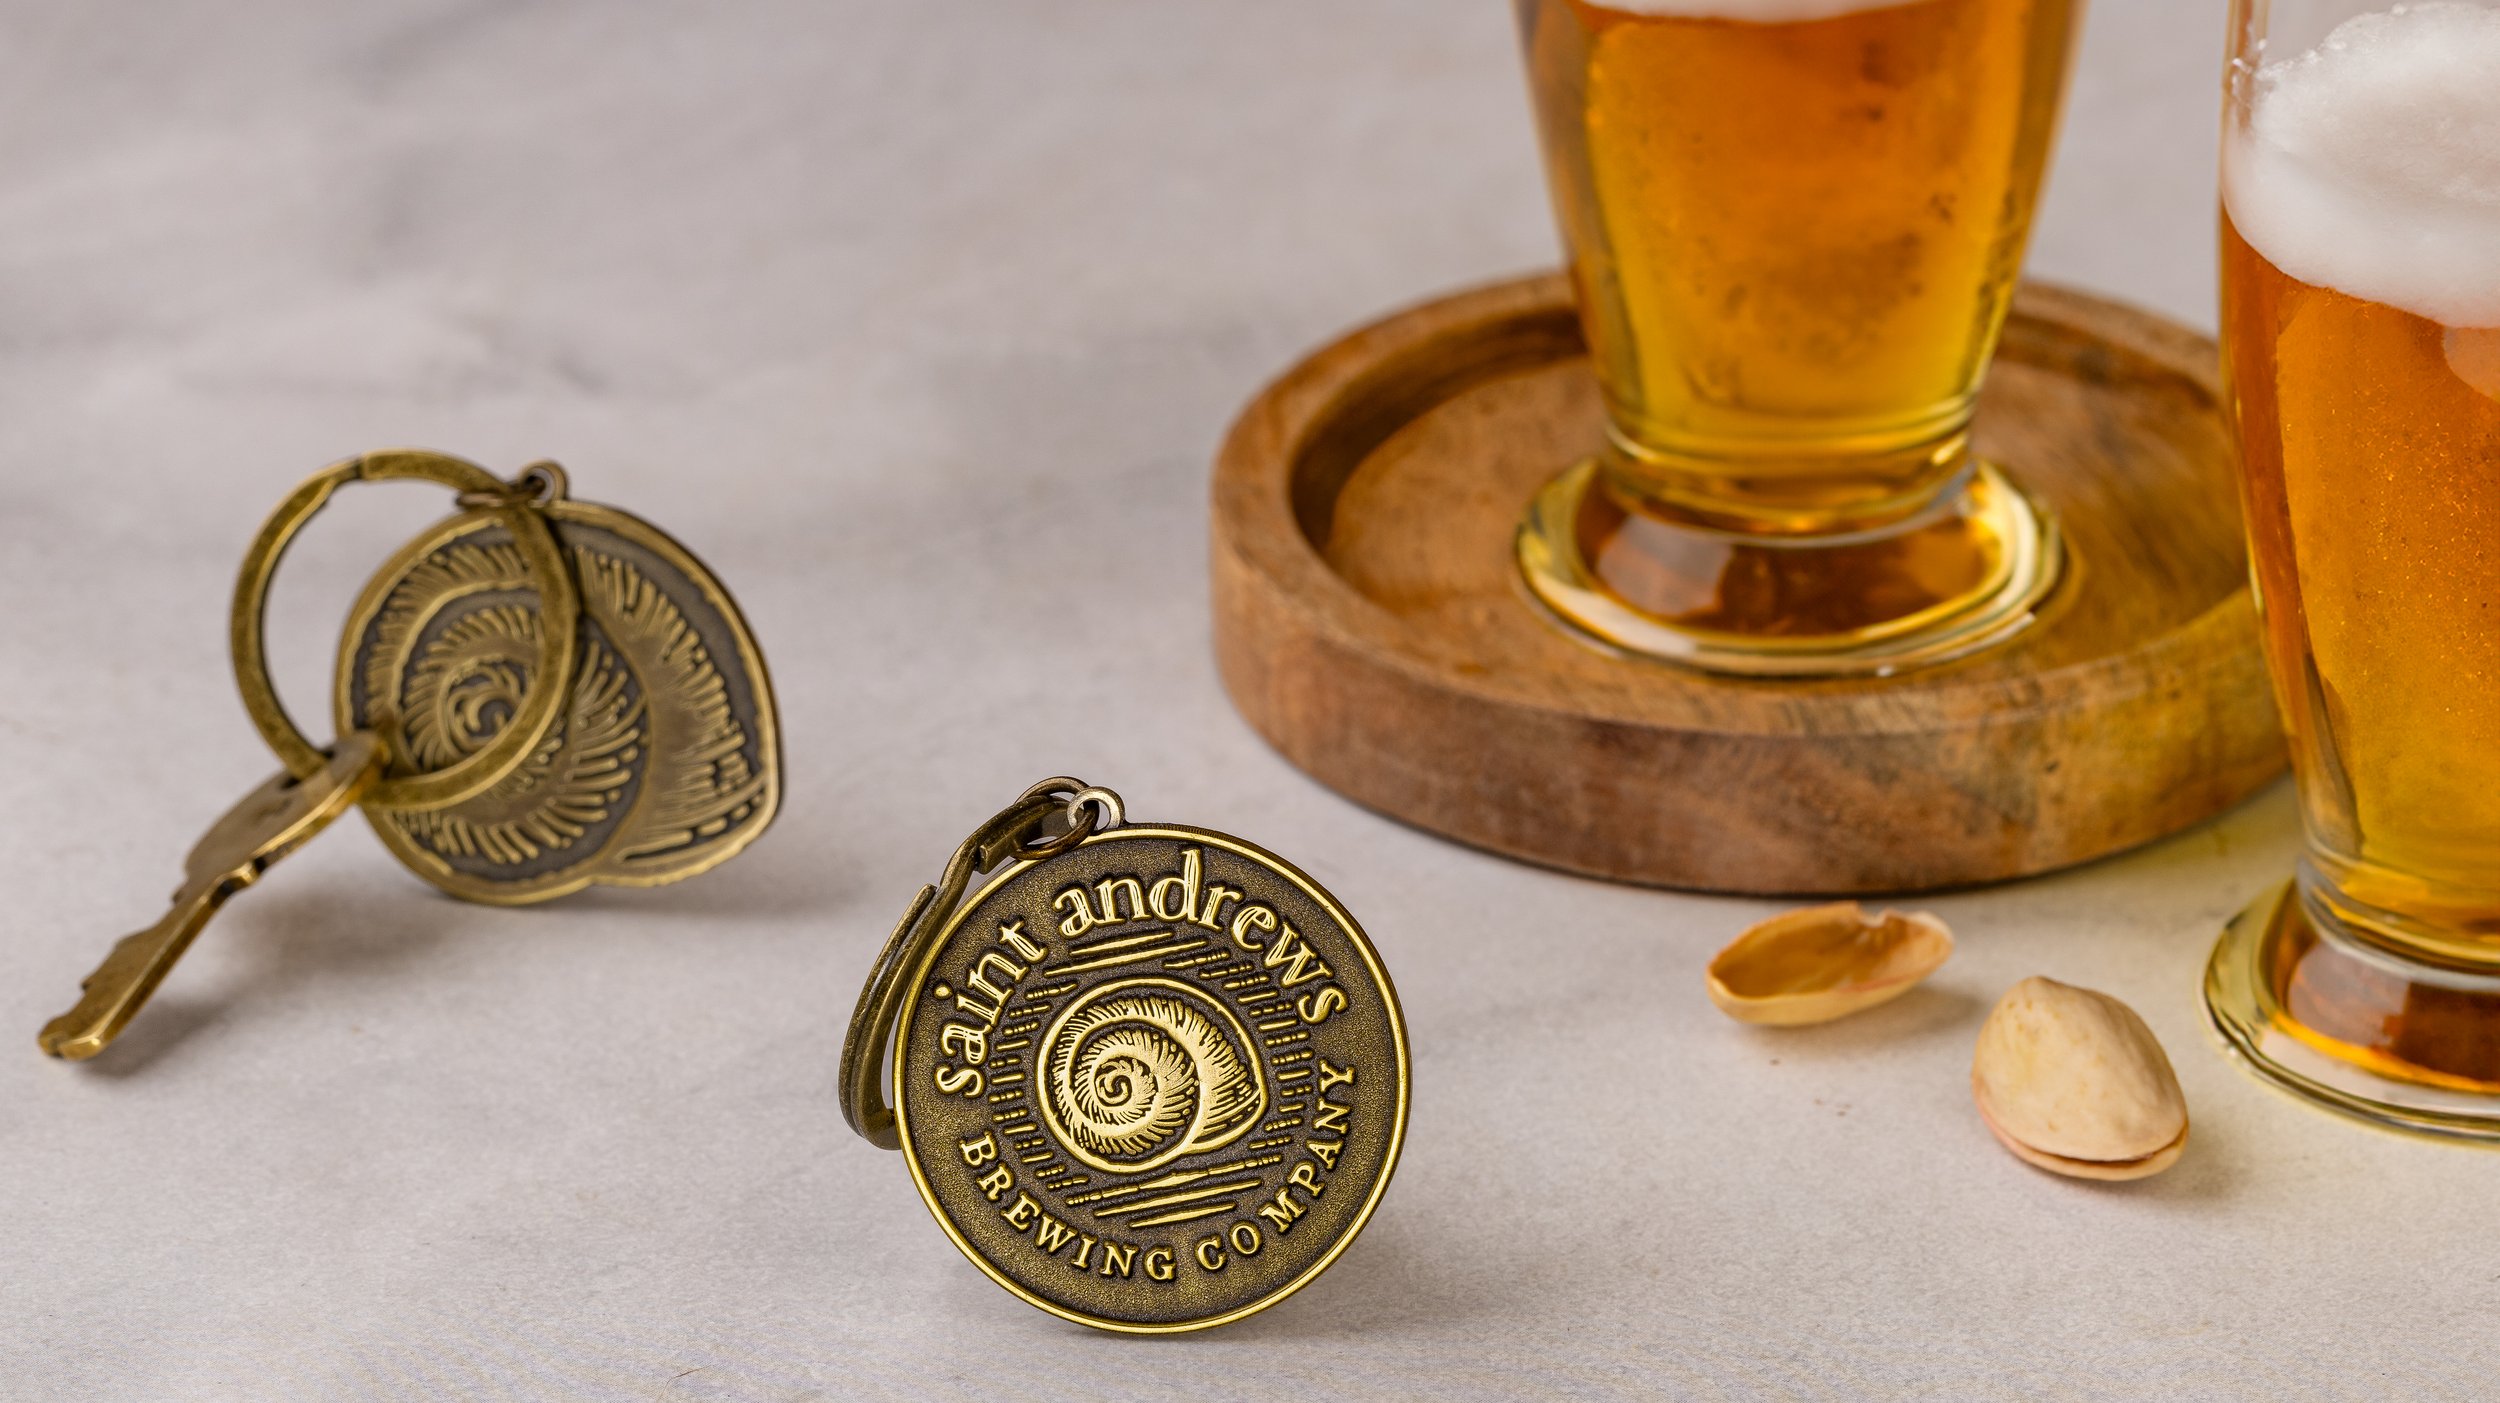 Staint Andrews Brewing Company - Die struck keychain